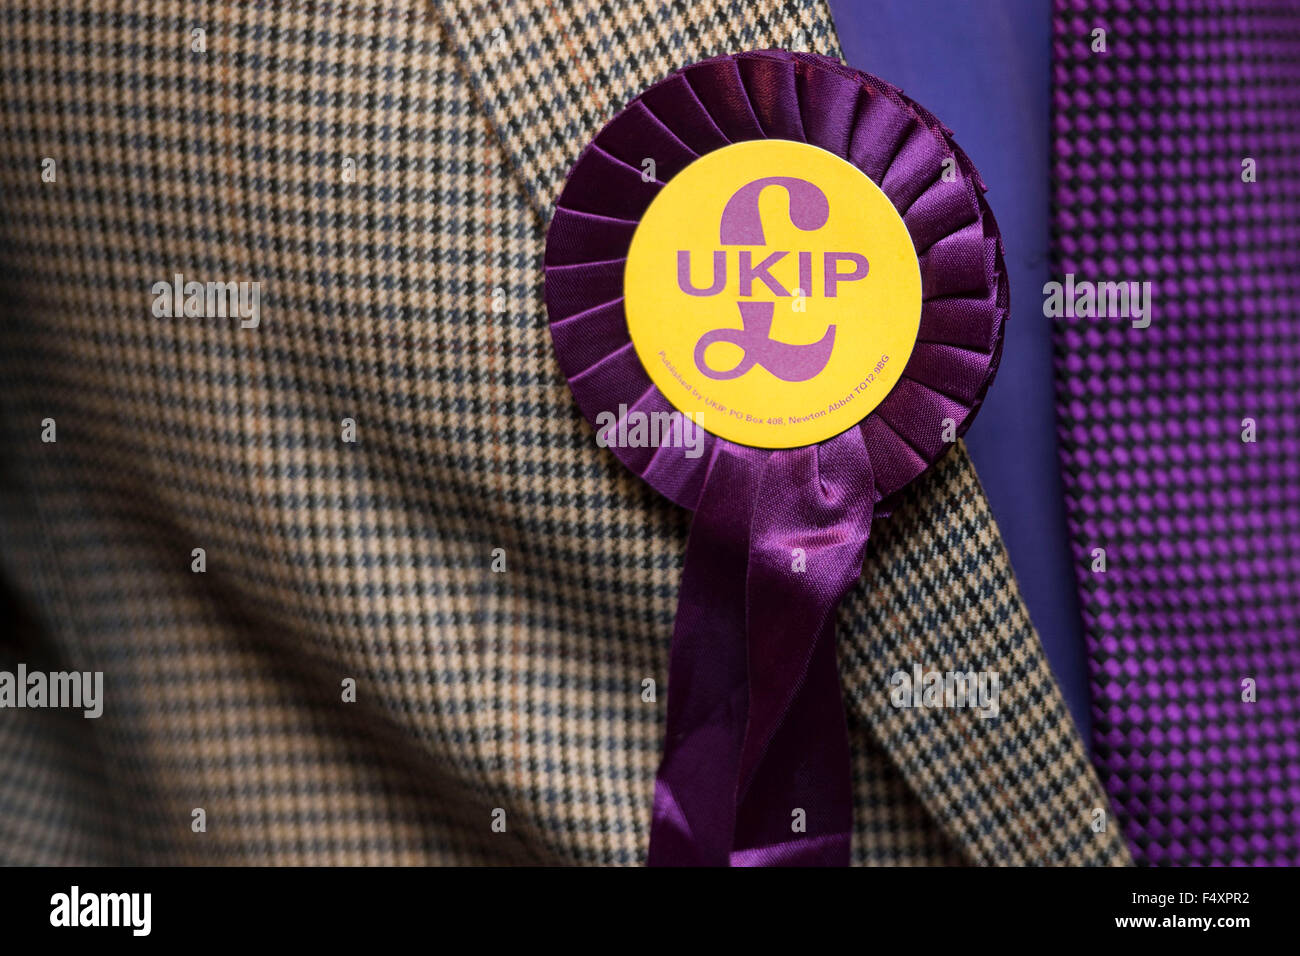 A UKIP (UK Independence Party) rosette on a tweed jacket. Stock Photo